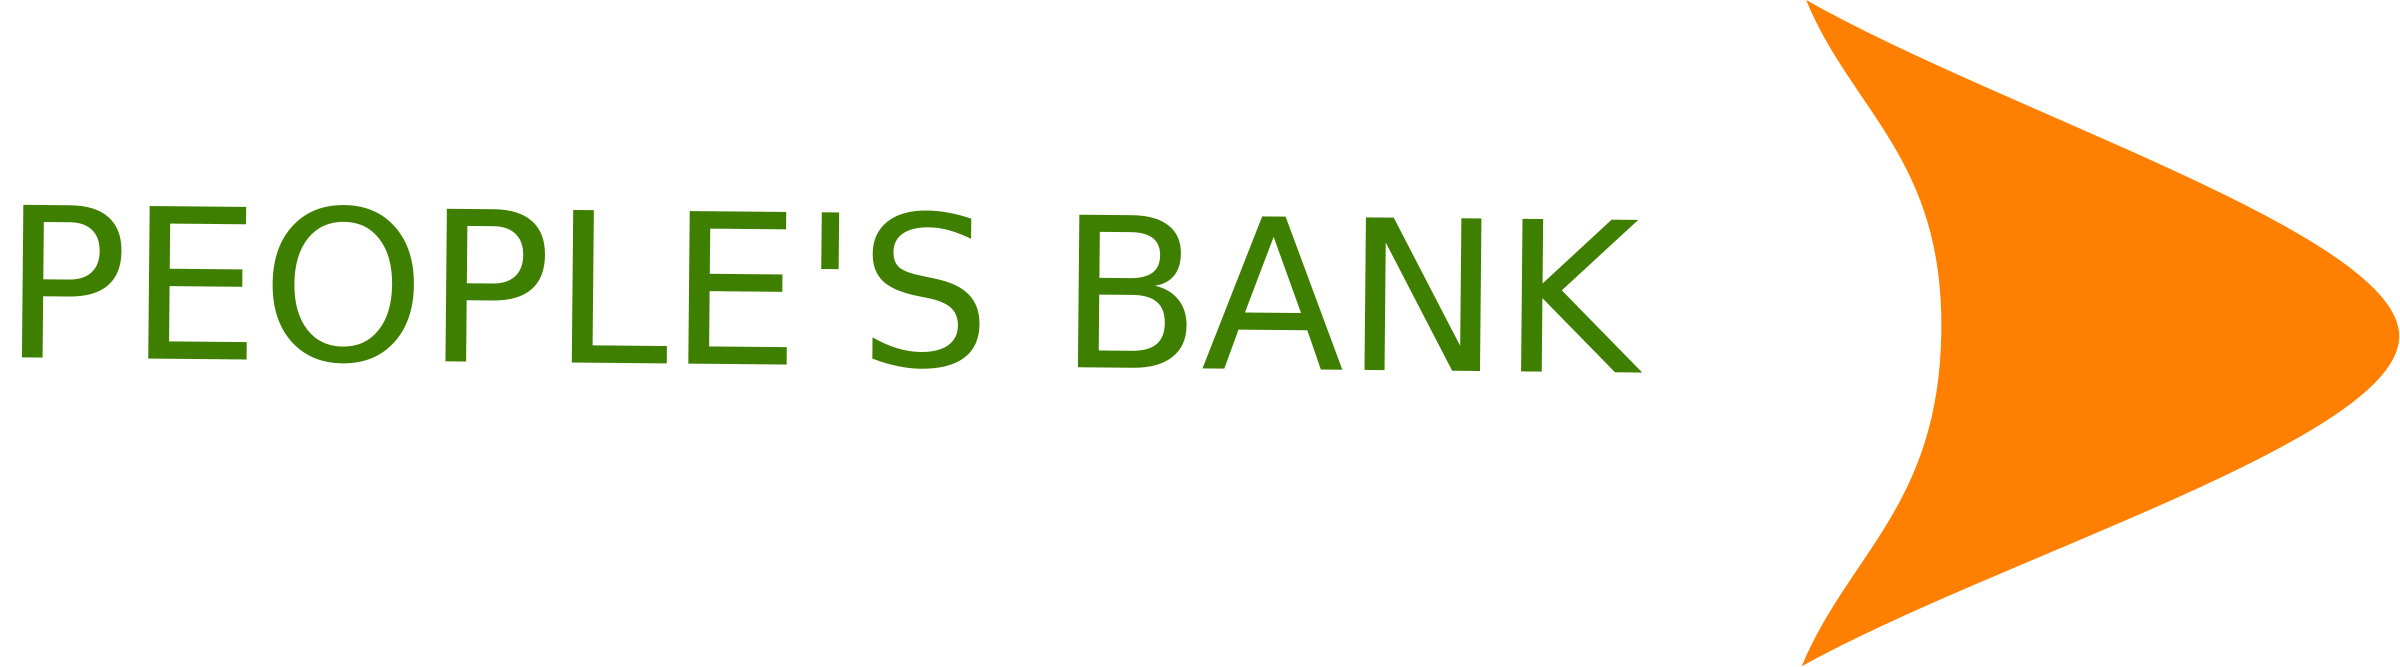 Green Bank Logo - People's Bank Logo SVG Vector & PNG Transparent Logo Supply